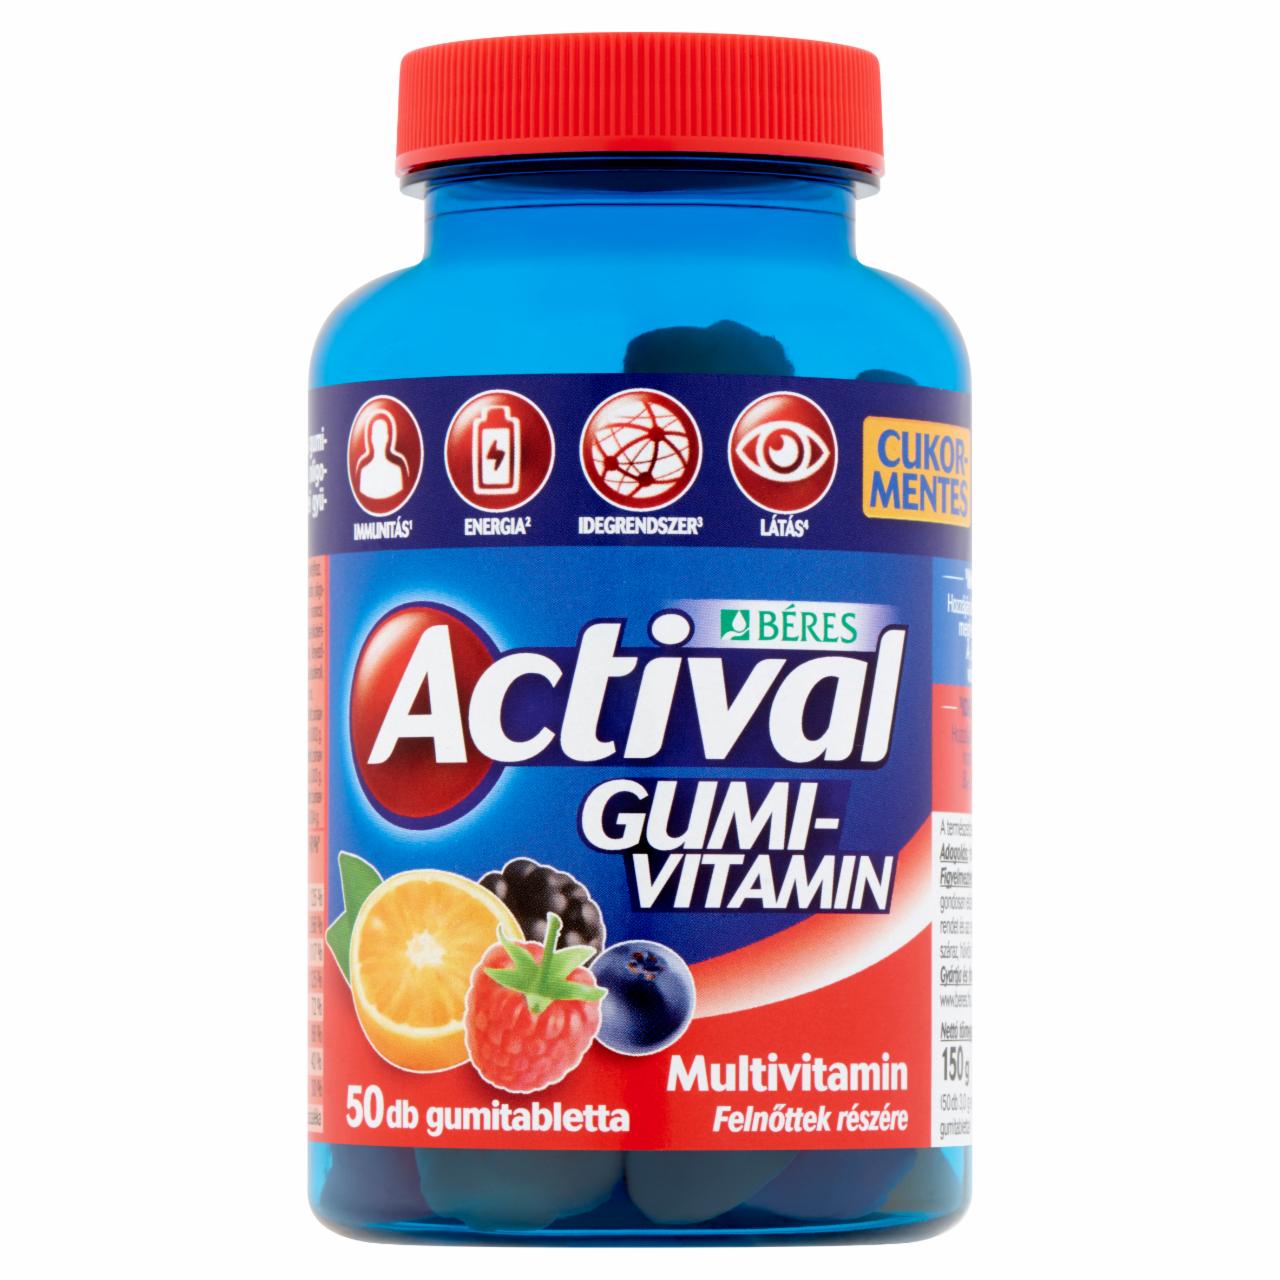 Képek - Béres Actival Gumivitamin cukormentes gumitabletta étrend-kiegészítő multivitamin 50 db 150 g